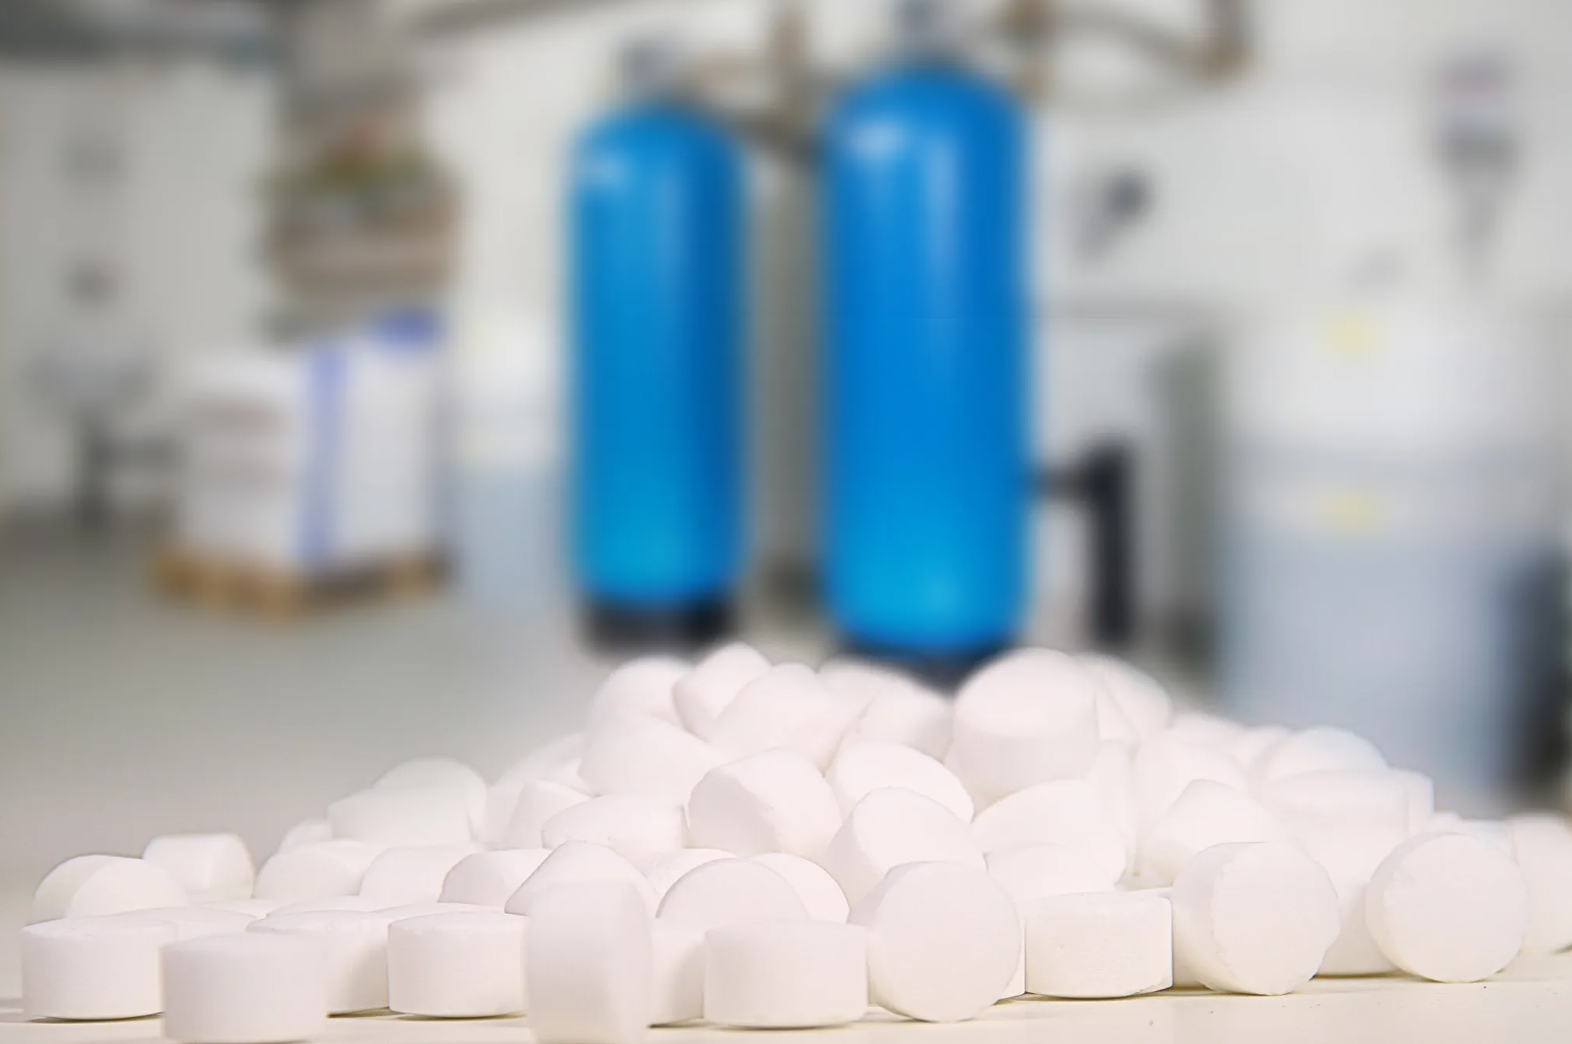 Axal per tabs regenerator salt salt tablets (25 kg)